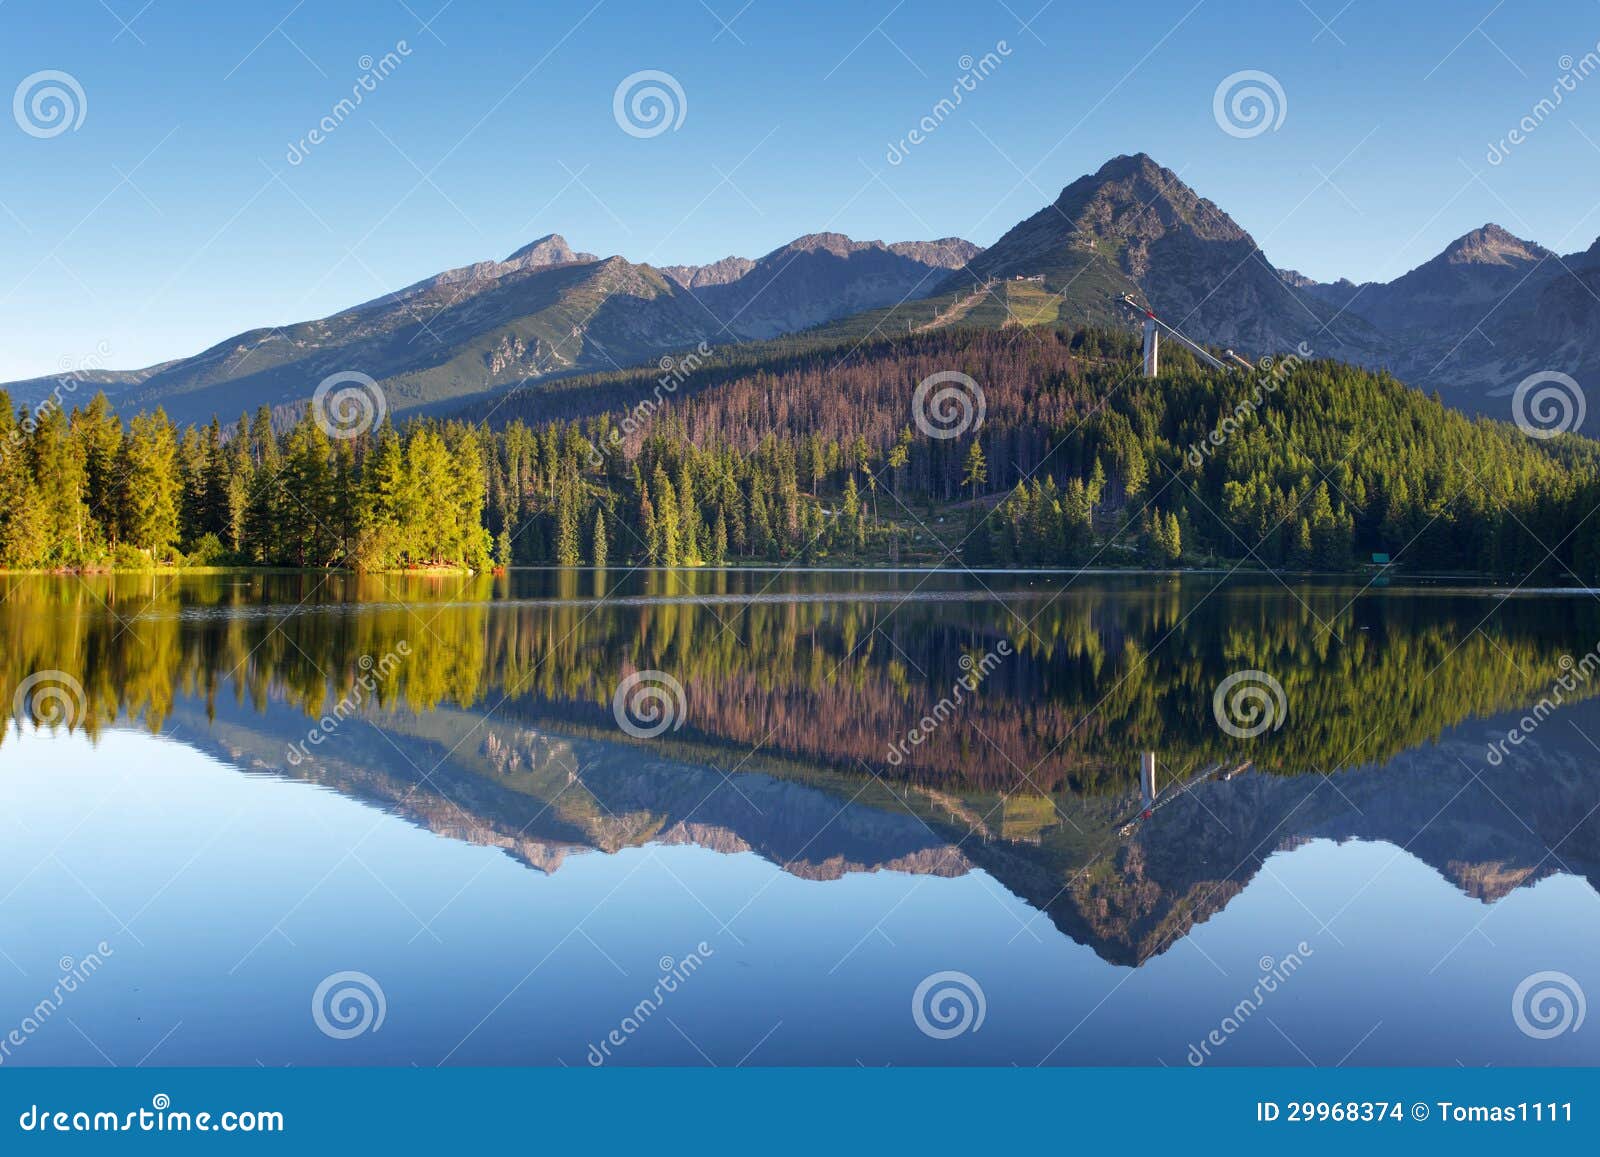 Nature Mountain Scene With Beautiful Lake In Slovakia Tatra St Stock